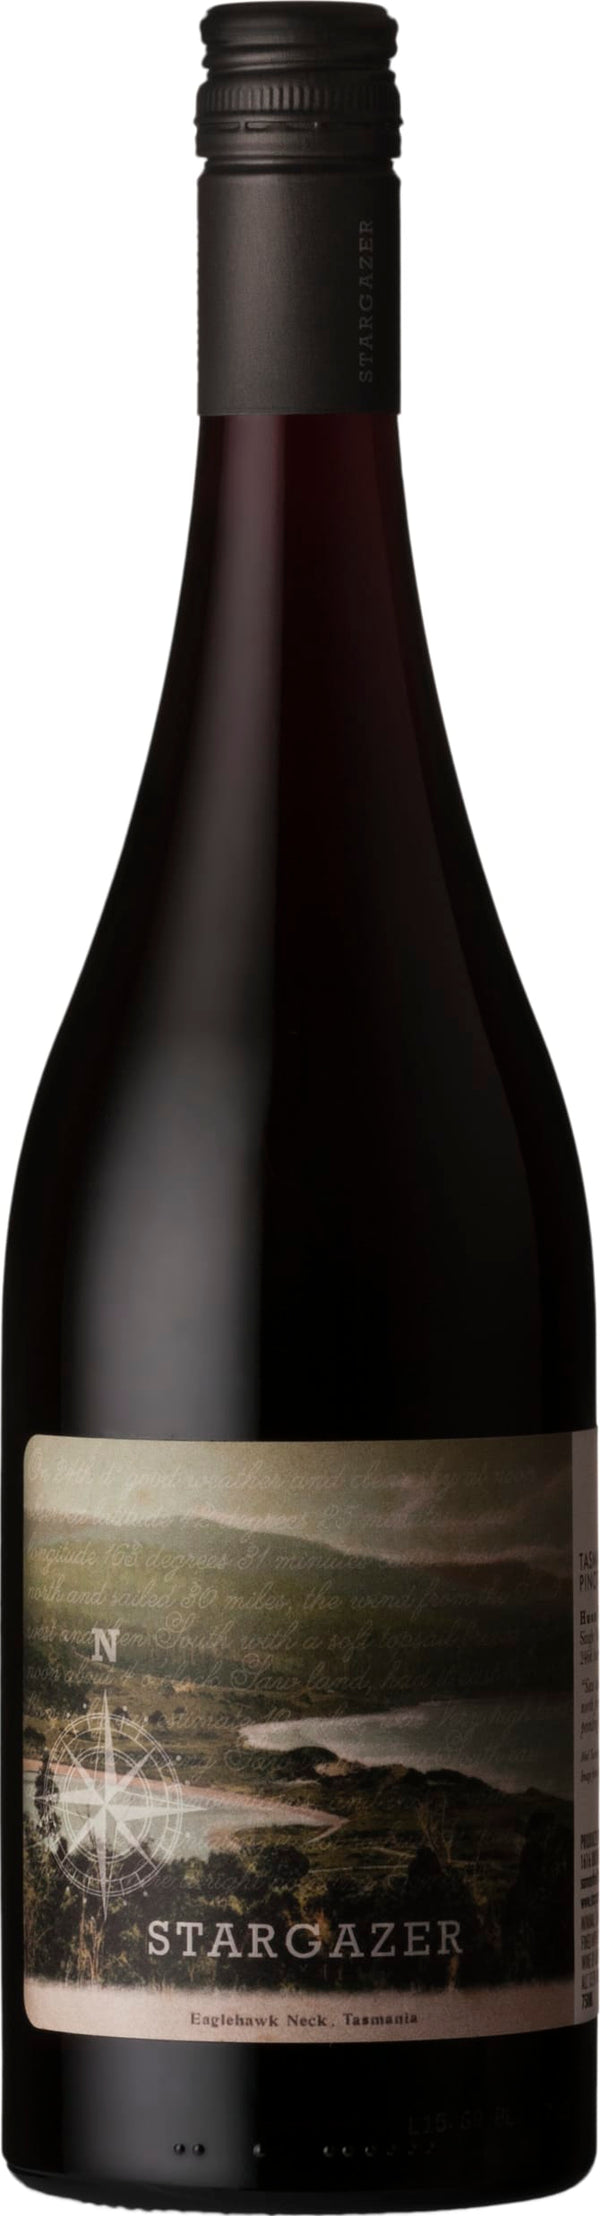 Stargazer Pinot Noir 2021 6x75cl - Just Wines 